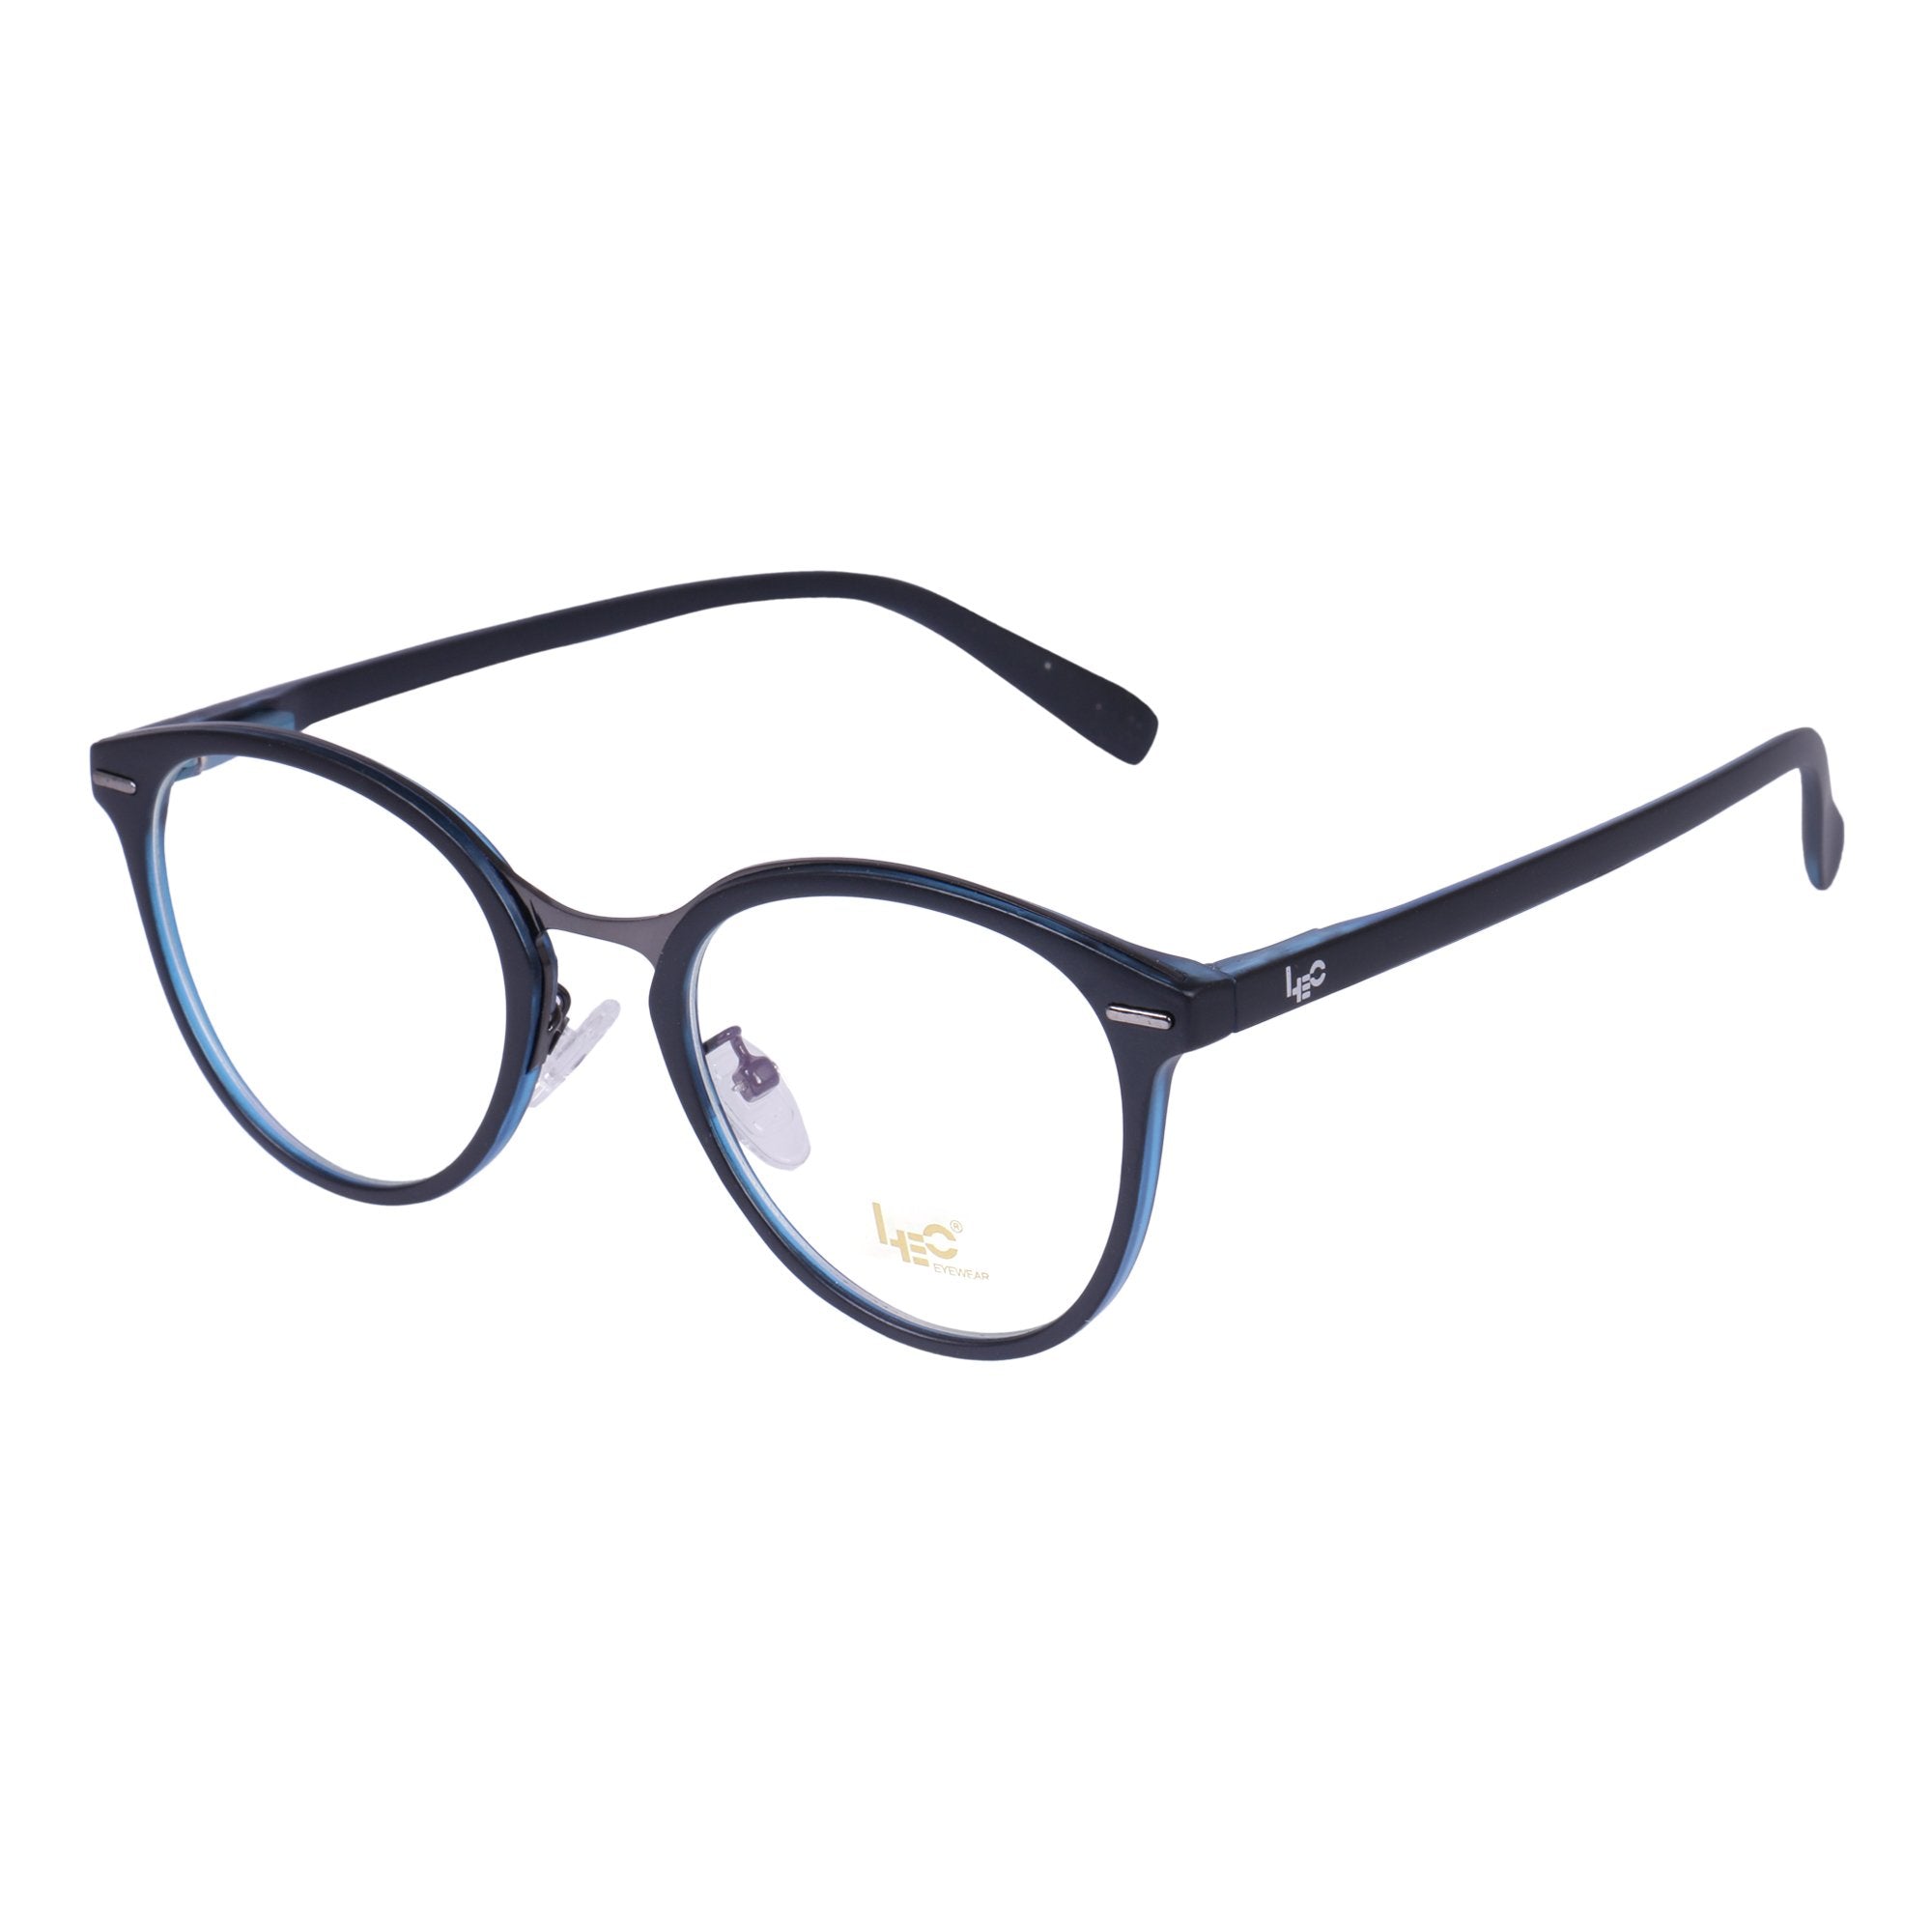 Black & Blue Cateye Rimmed Eyeglasses - L2758